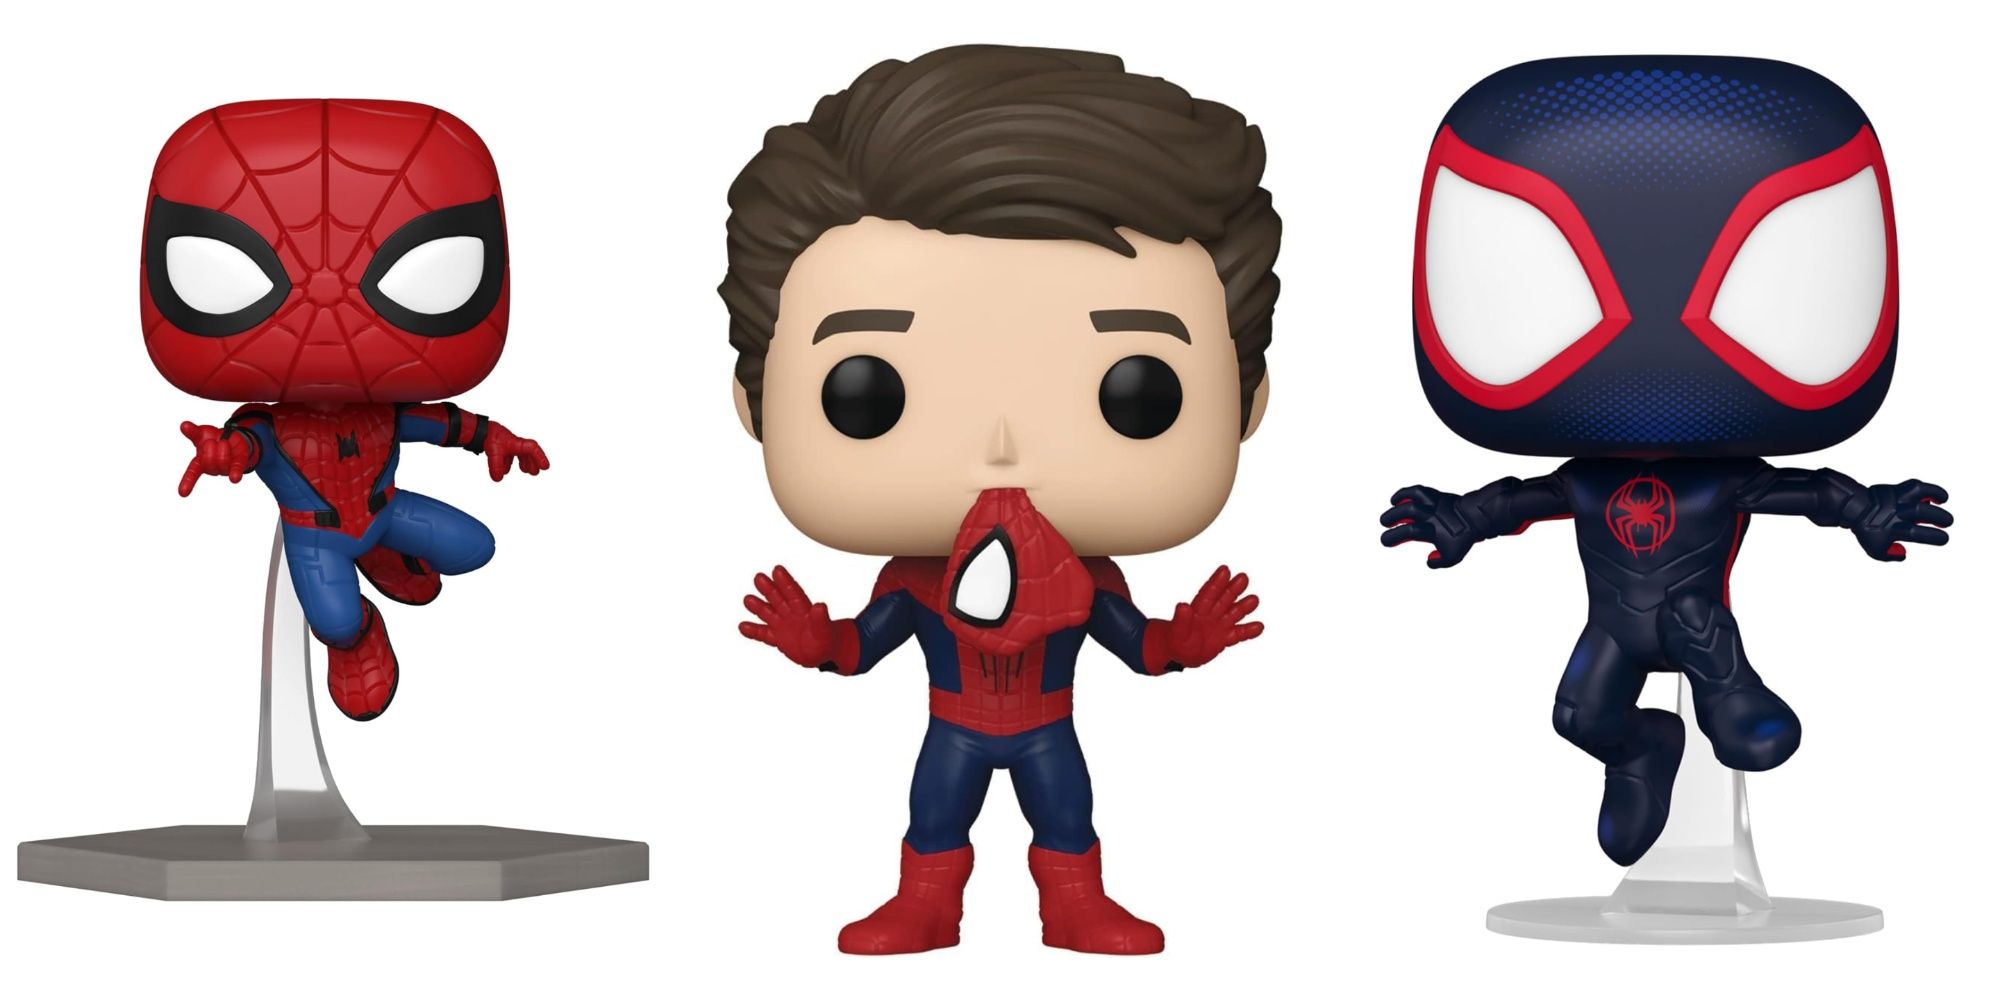 Spider-Man Funko Pops Featured Image Including Three Spider-Men Funko Pops